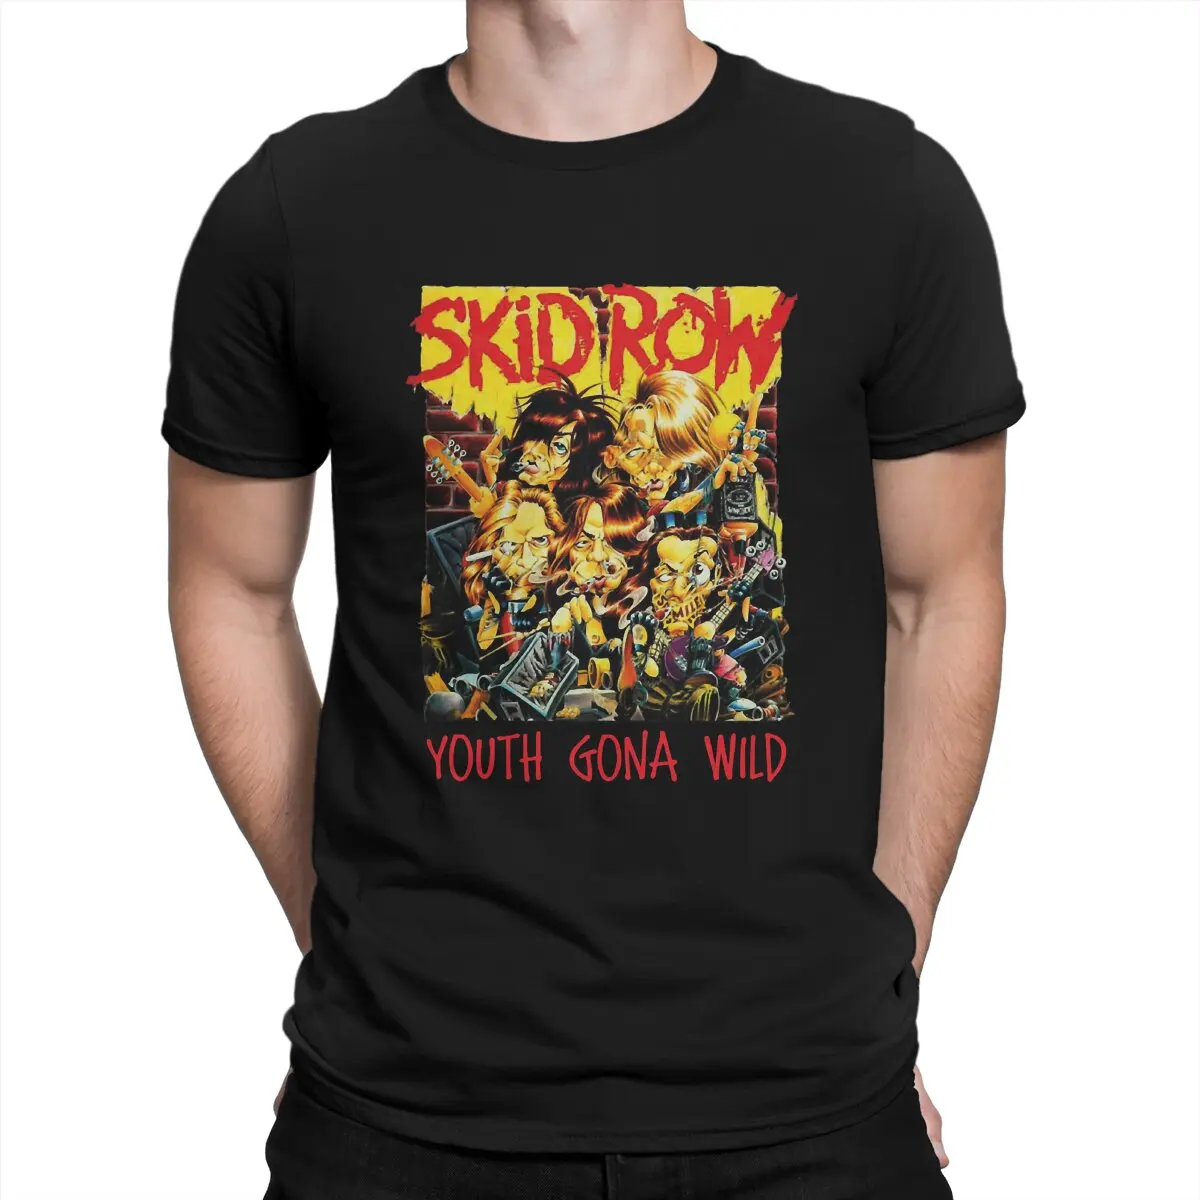 Men's T-Shirt Youth Gona Wild Awesome 100% Cotton Tee Shirt Short Sleeve Skid Row T Shirt Crewneck Clothes Summer